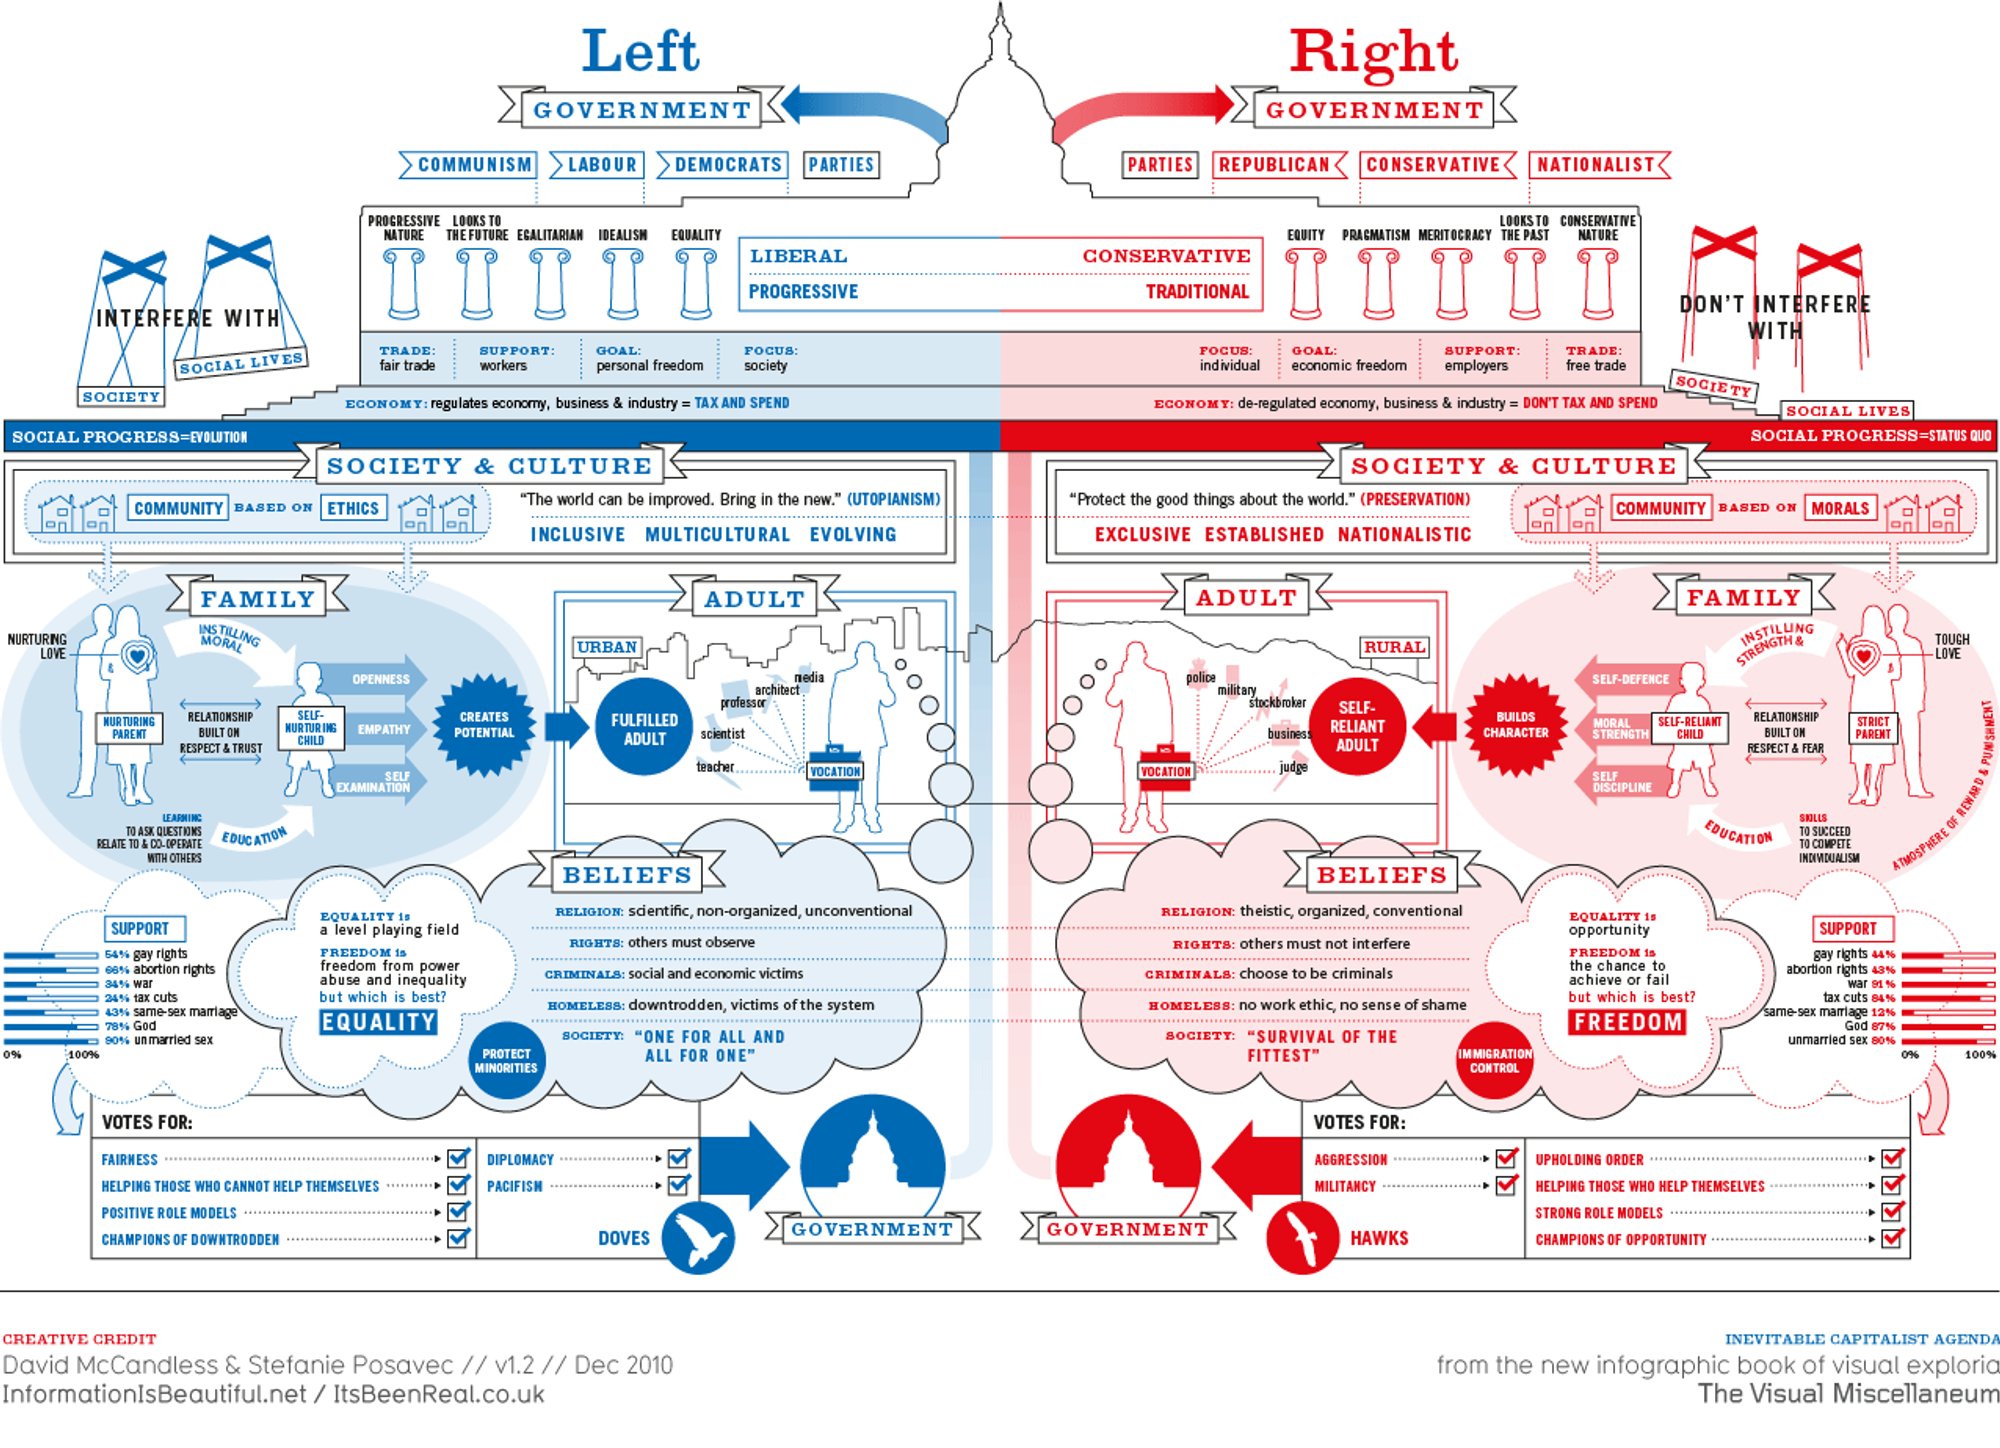 https://informationisbeautiful.net/visualizations/left-vs-right-us/